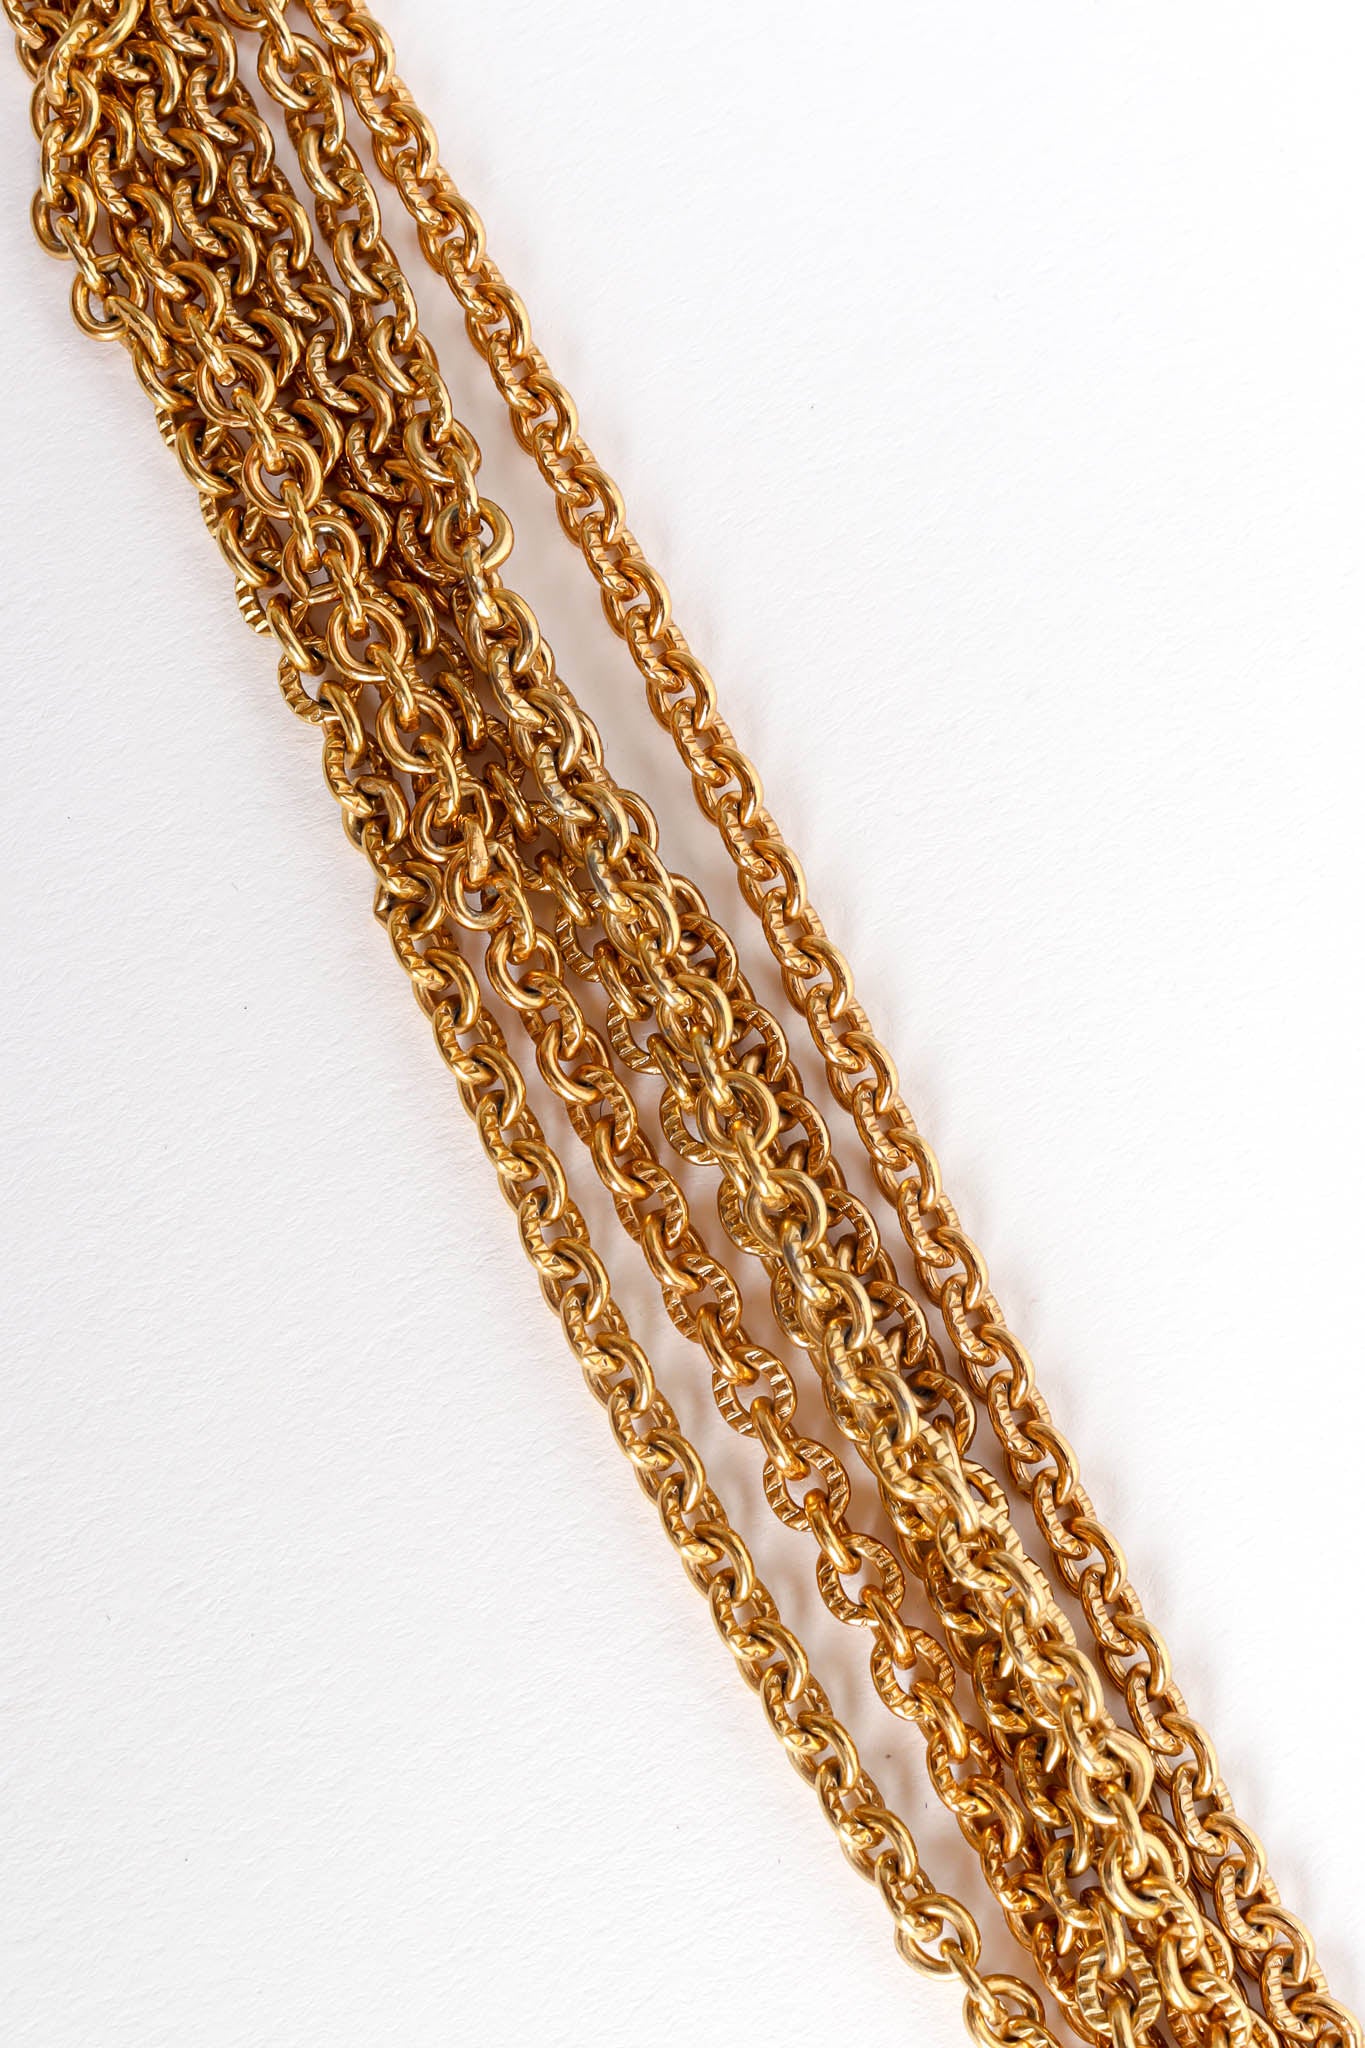 Vintage Tiered Filigree Globe Necklace bismark chains detail @ Recess Los Angeles